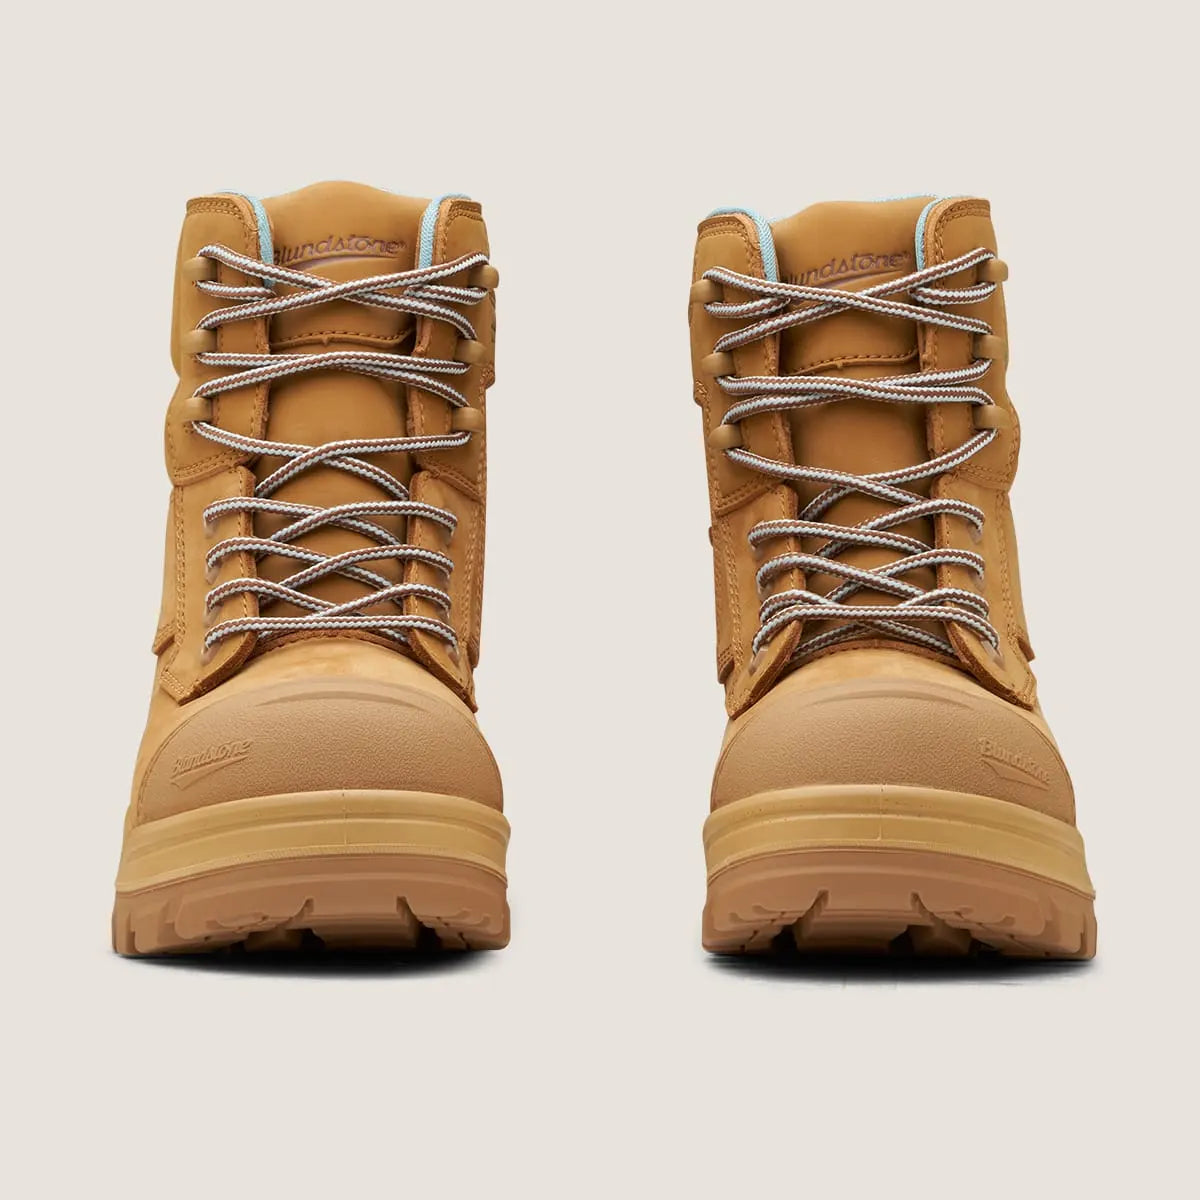 Blundstone 8860 Women’s Rotoflex Safety Boots-Wheat